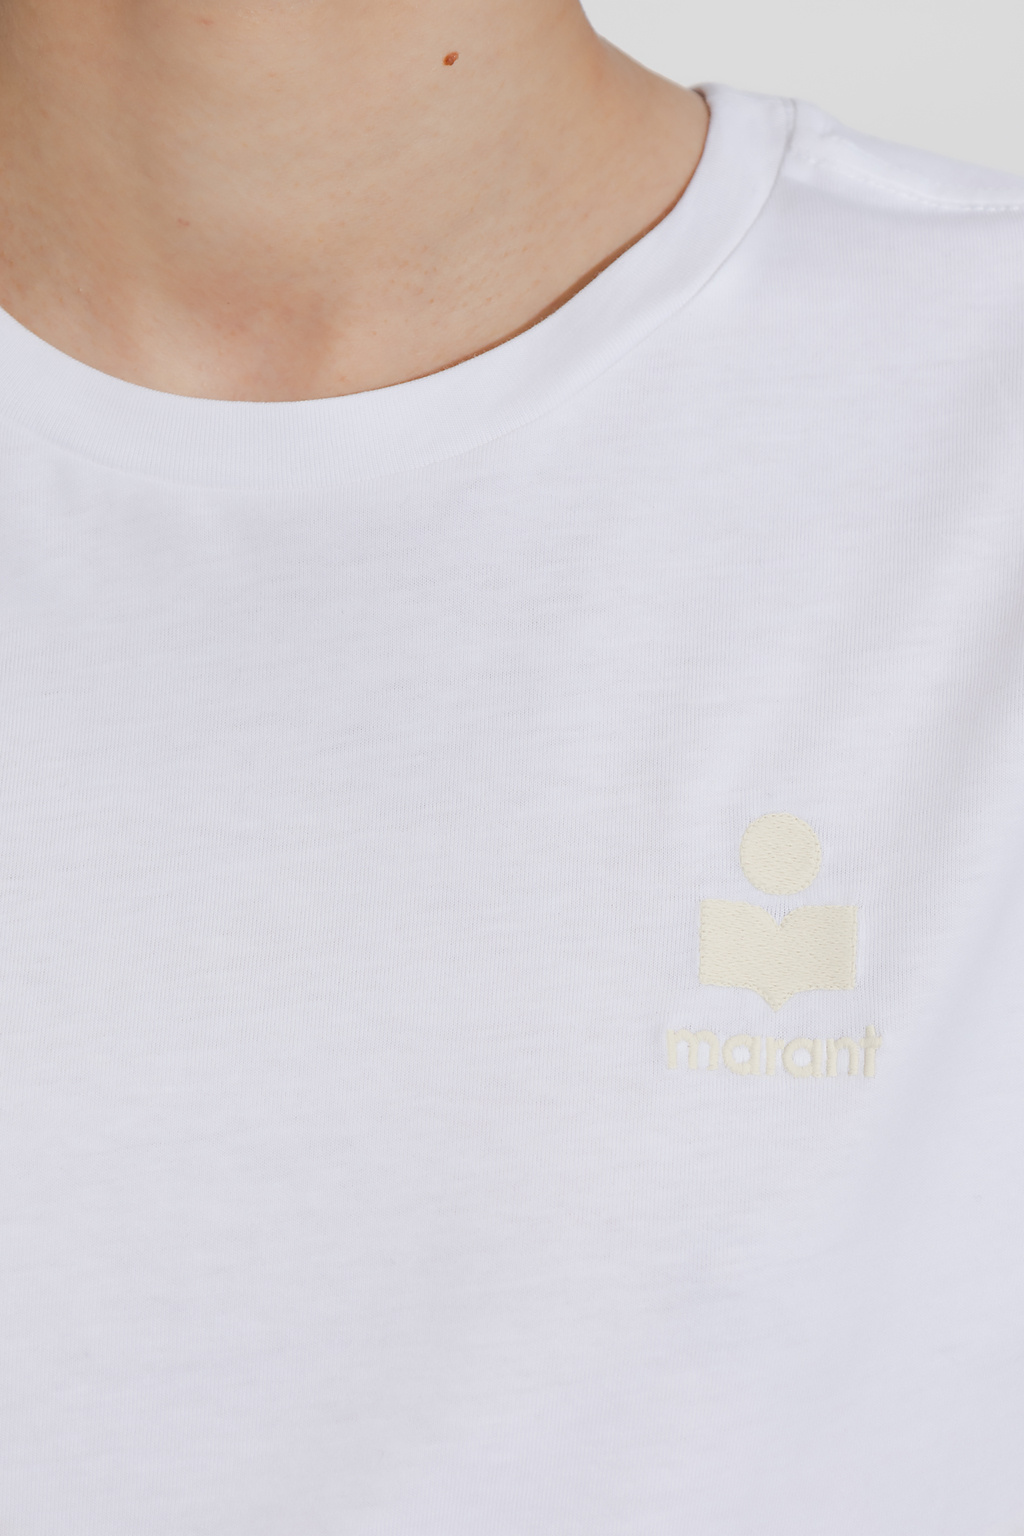 Marant Etoile ‘Aby’ T-shirt